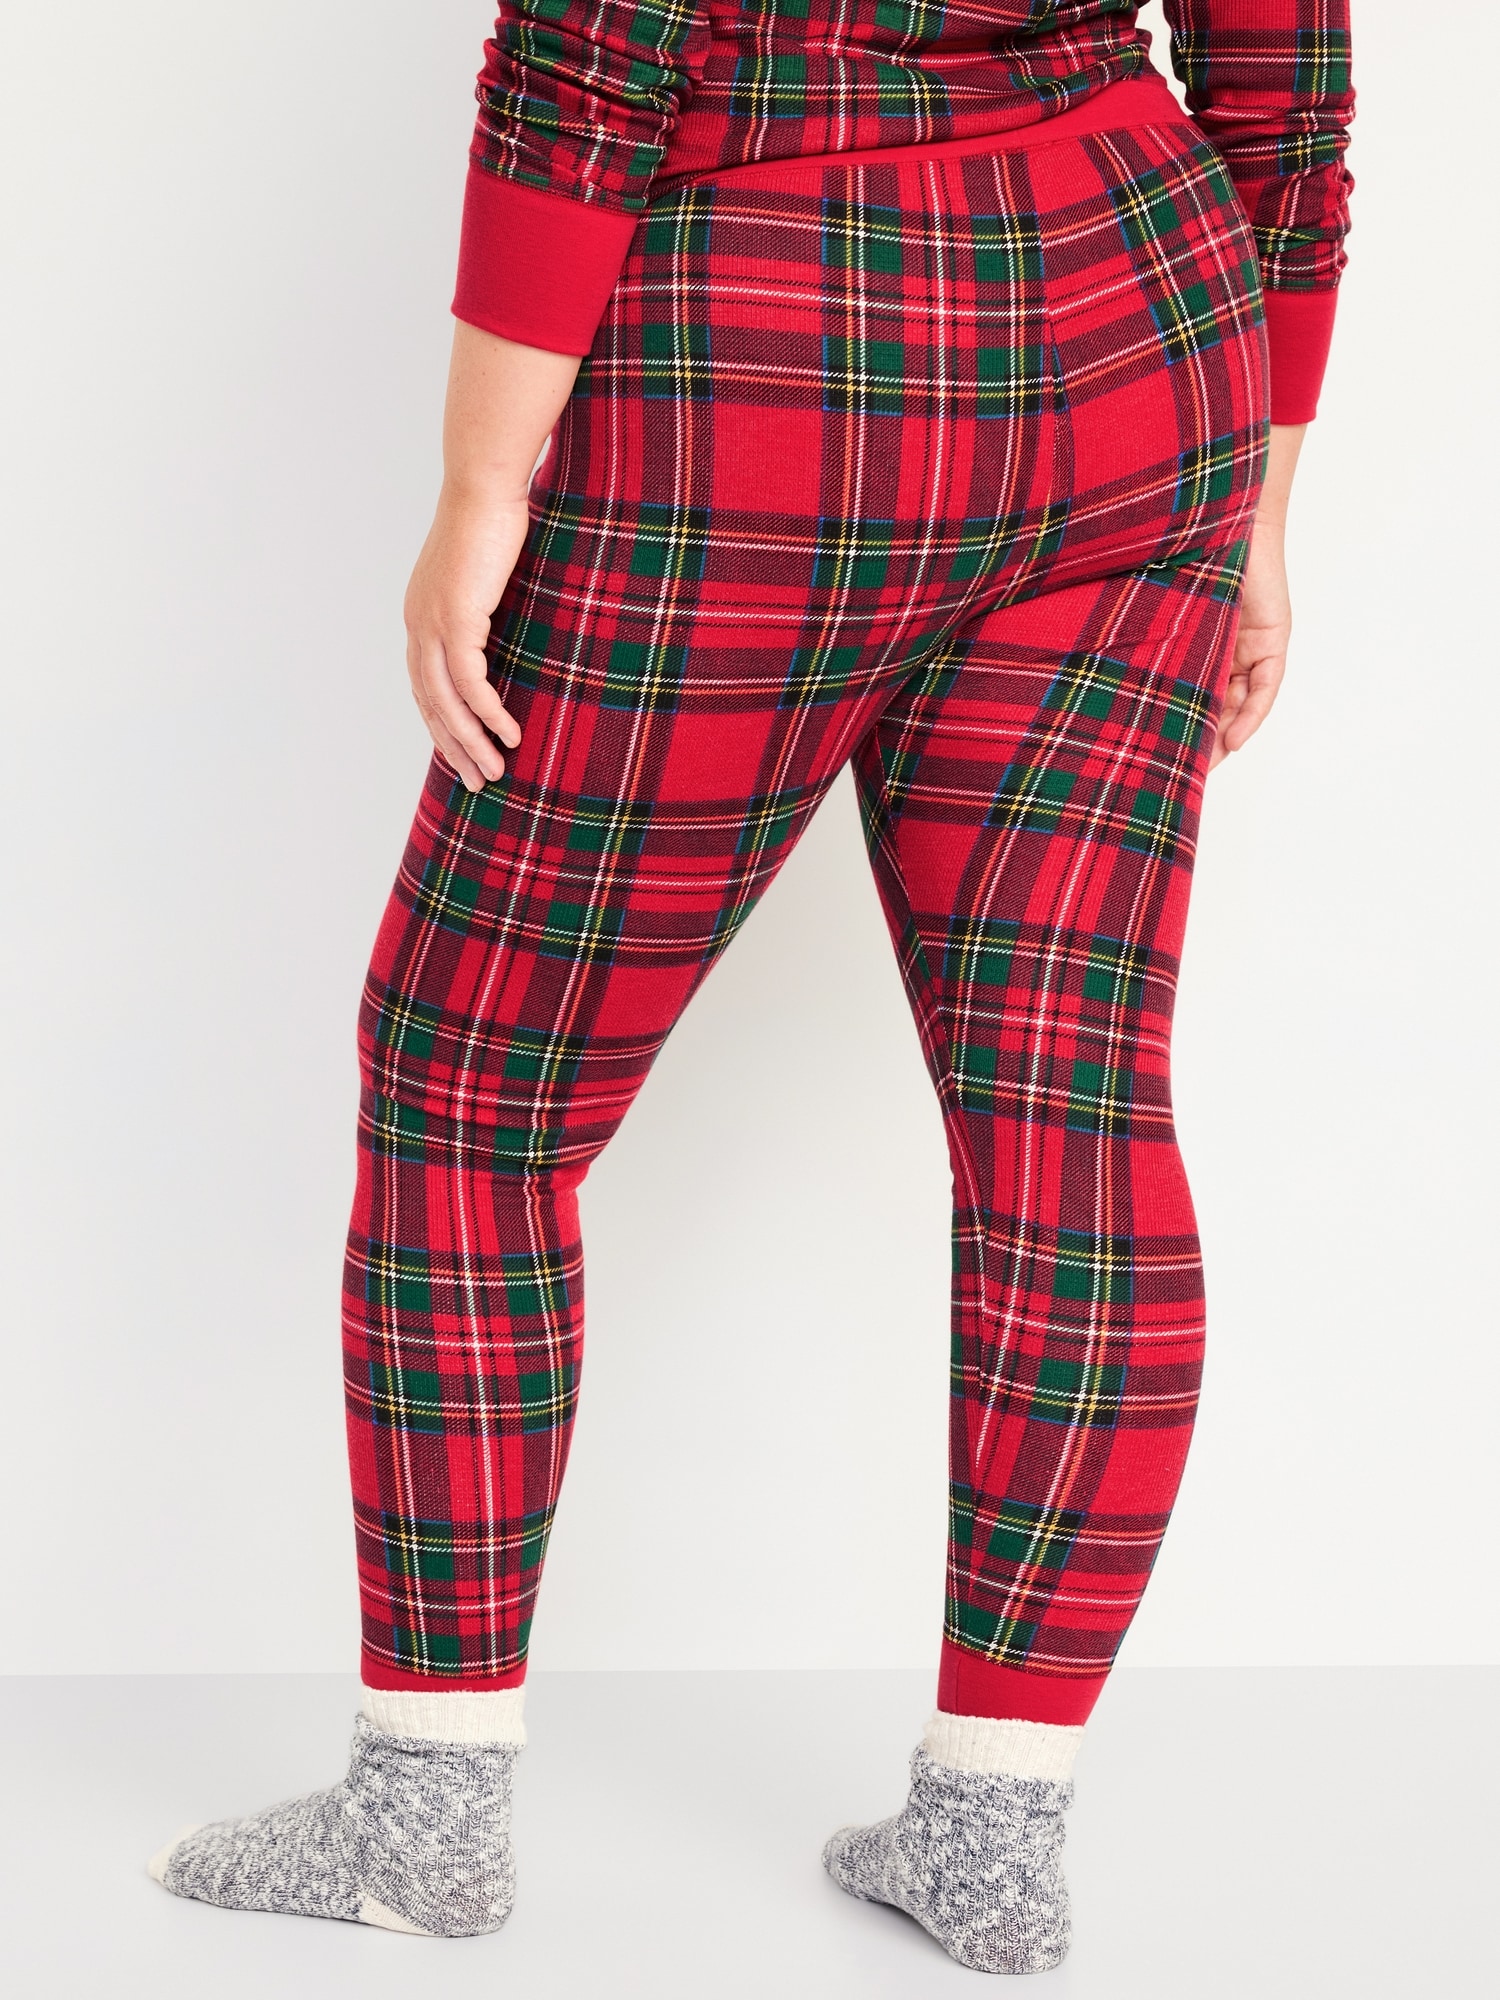 NWT Old Navy Black Thermal Knit Pajama Pants Sleep Leggings Lounge Women XS  L XL